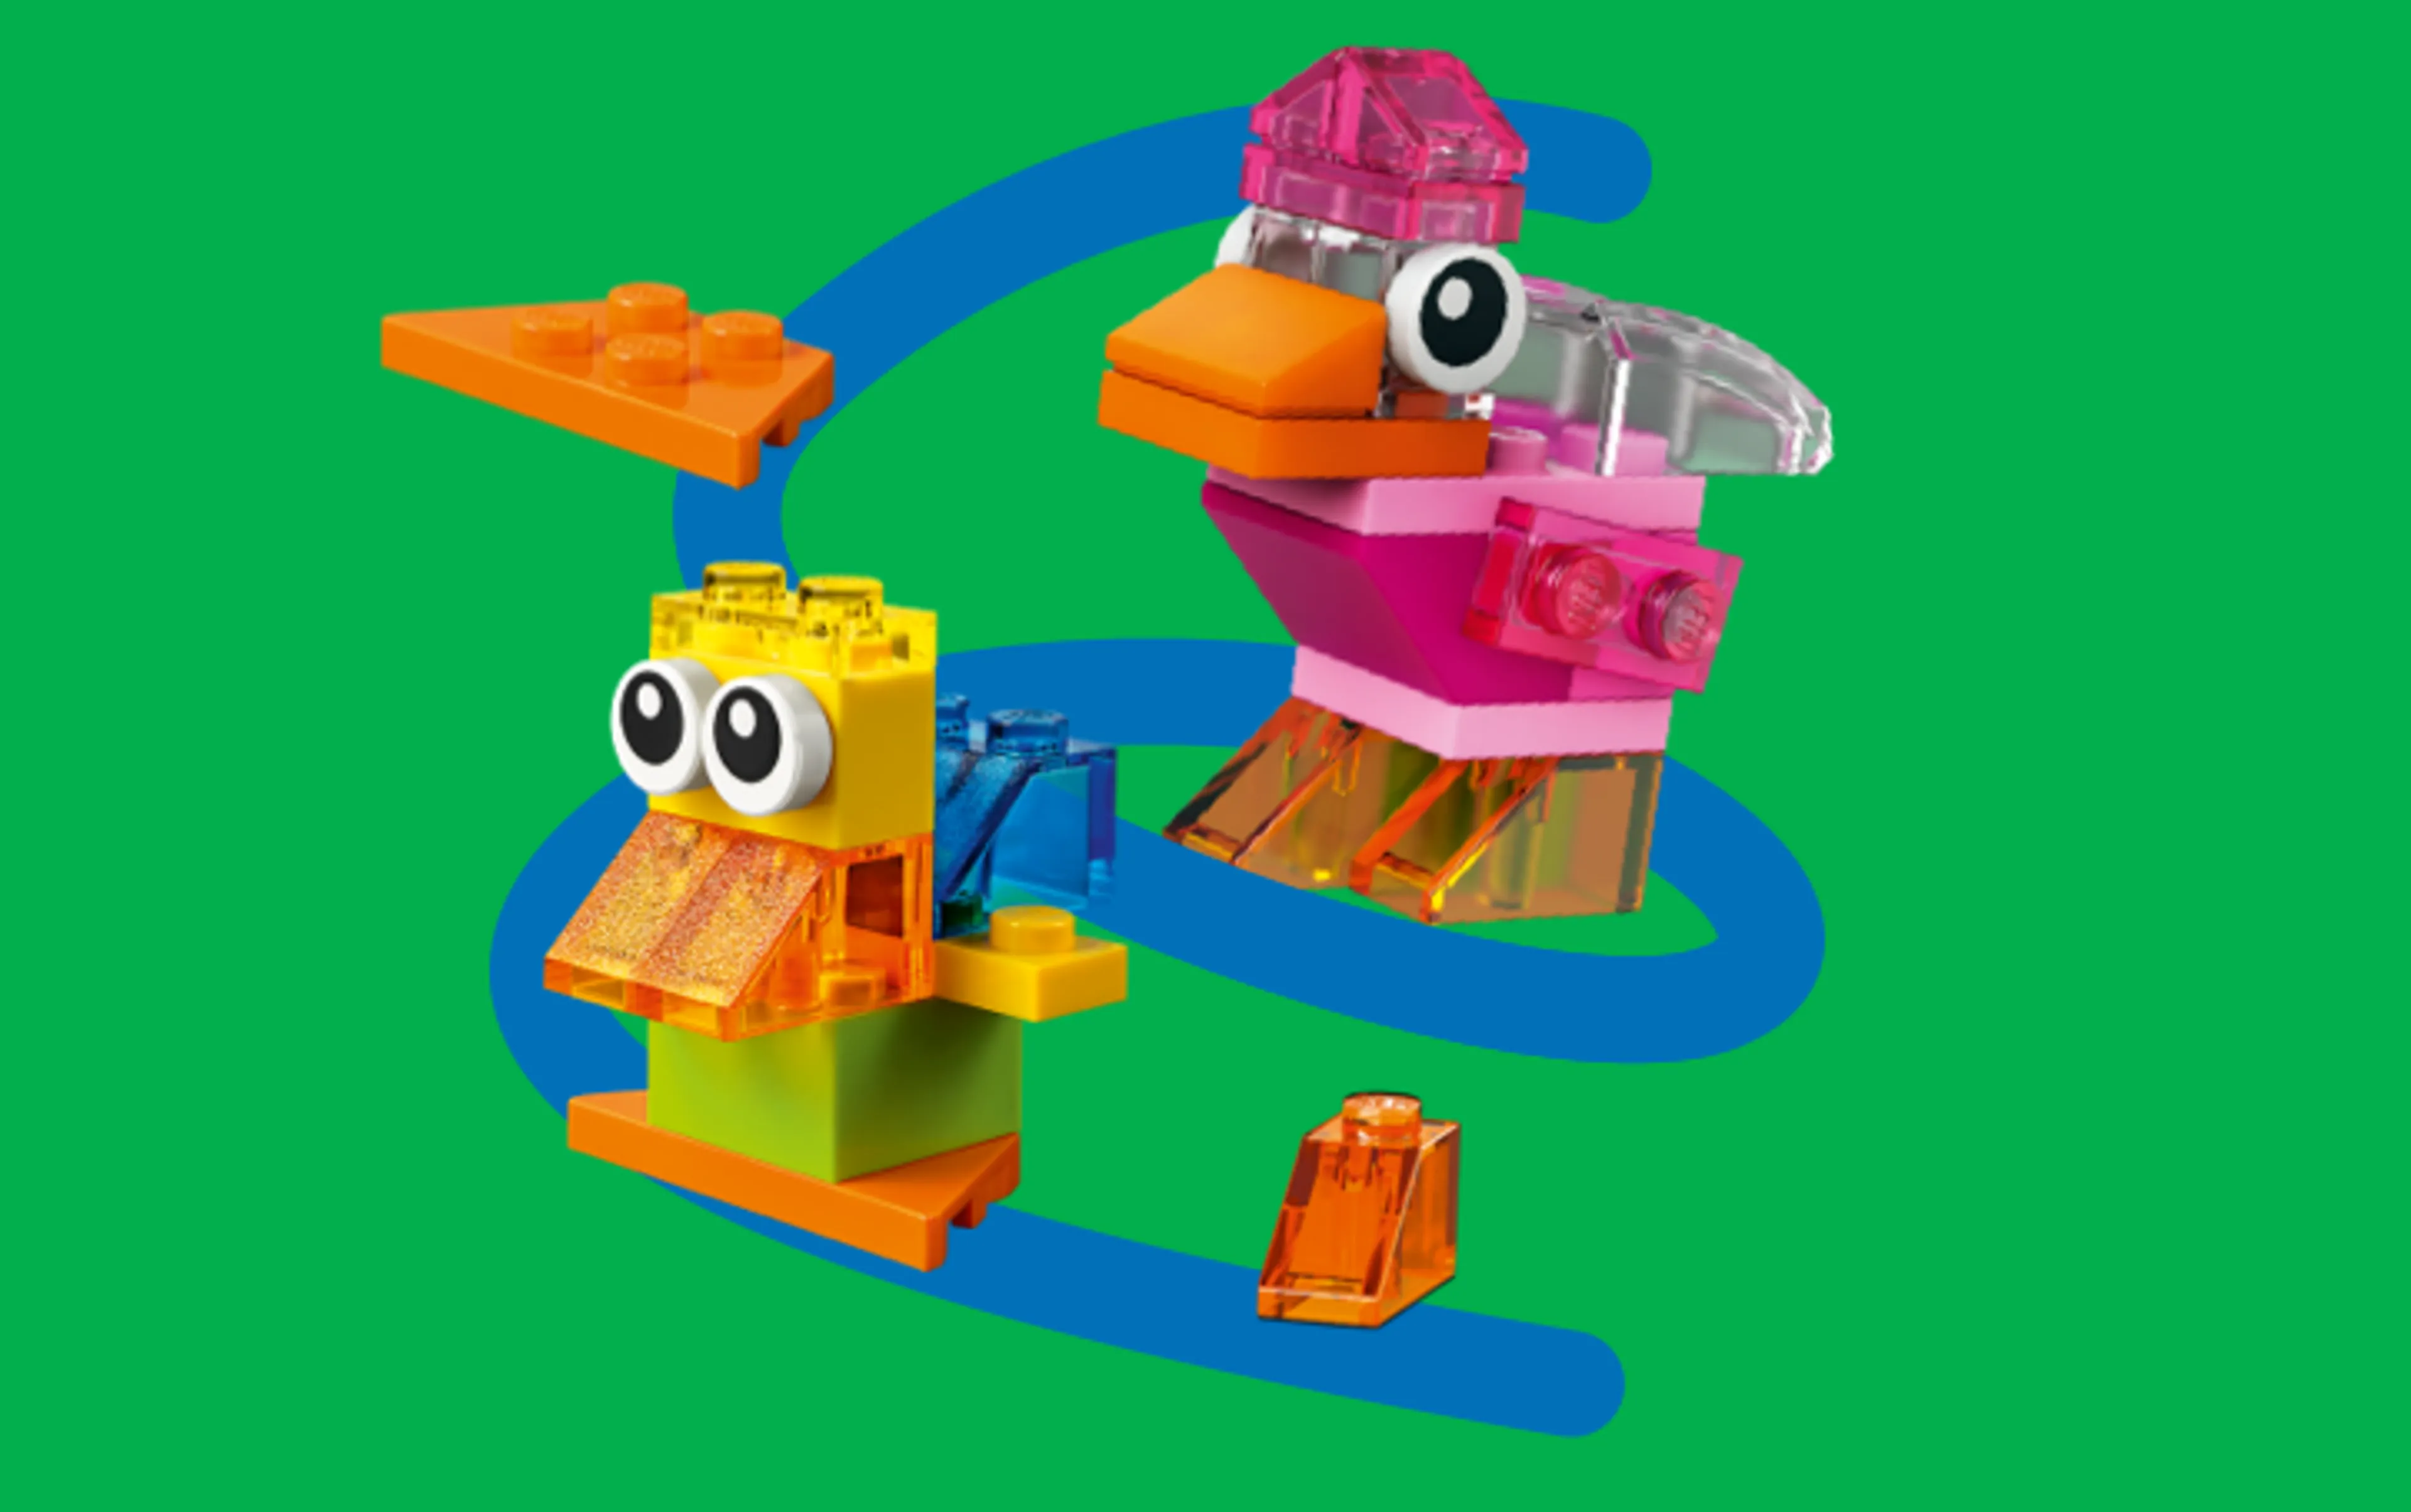 A LEGO Duck